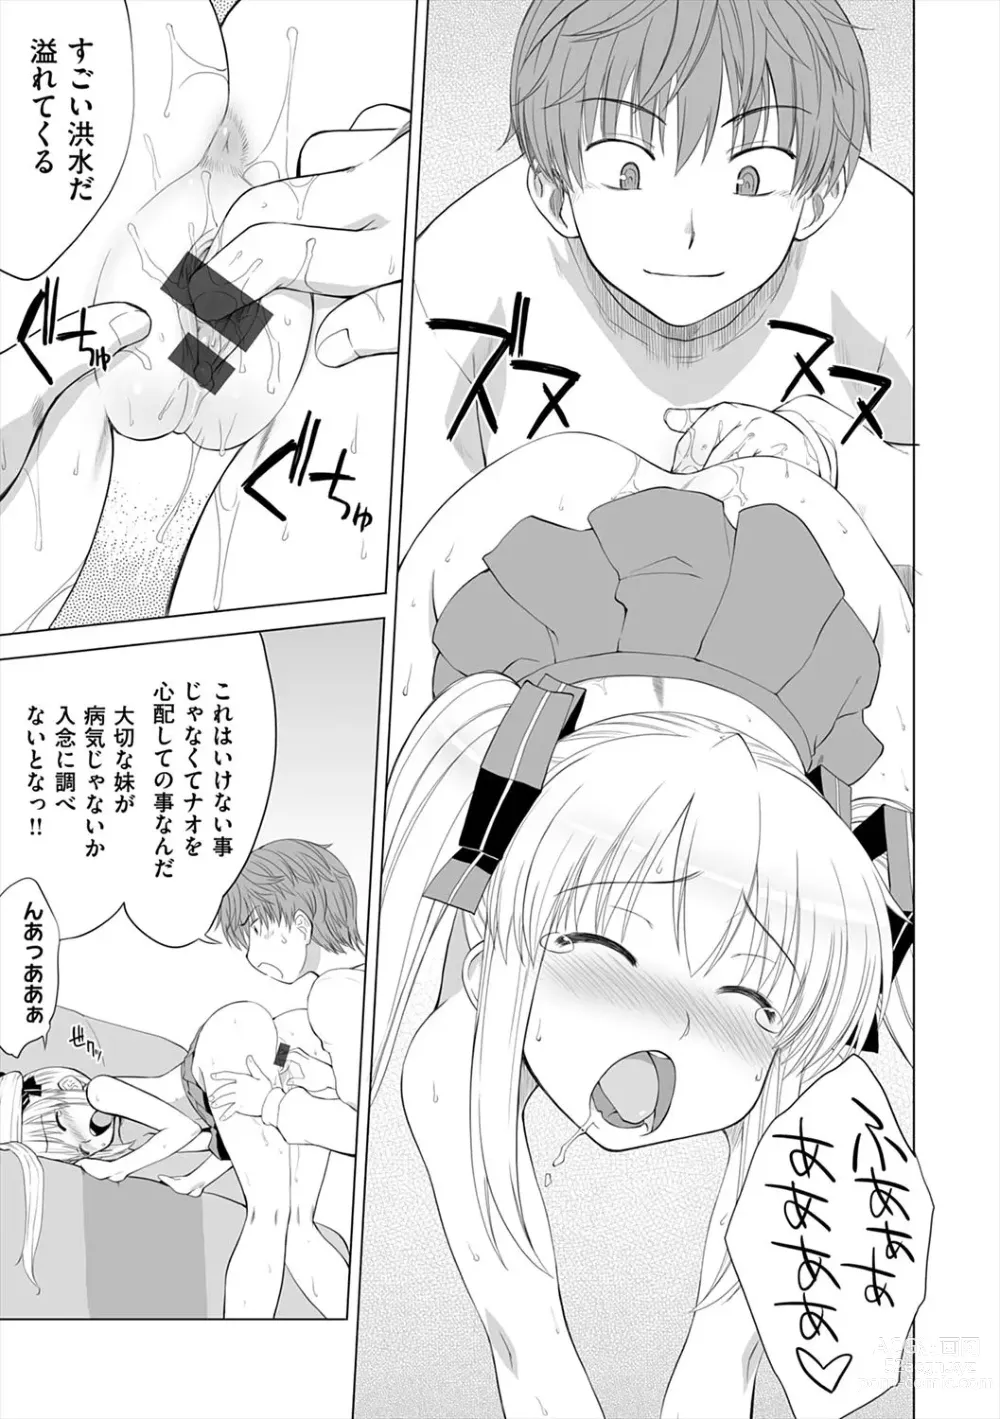 Page 191 of manga Marble Girls